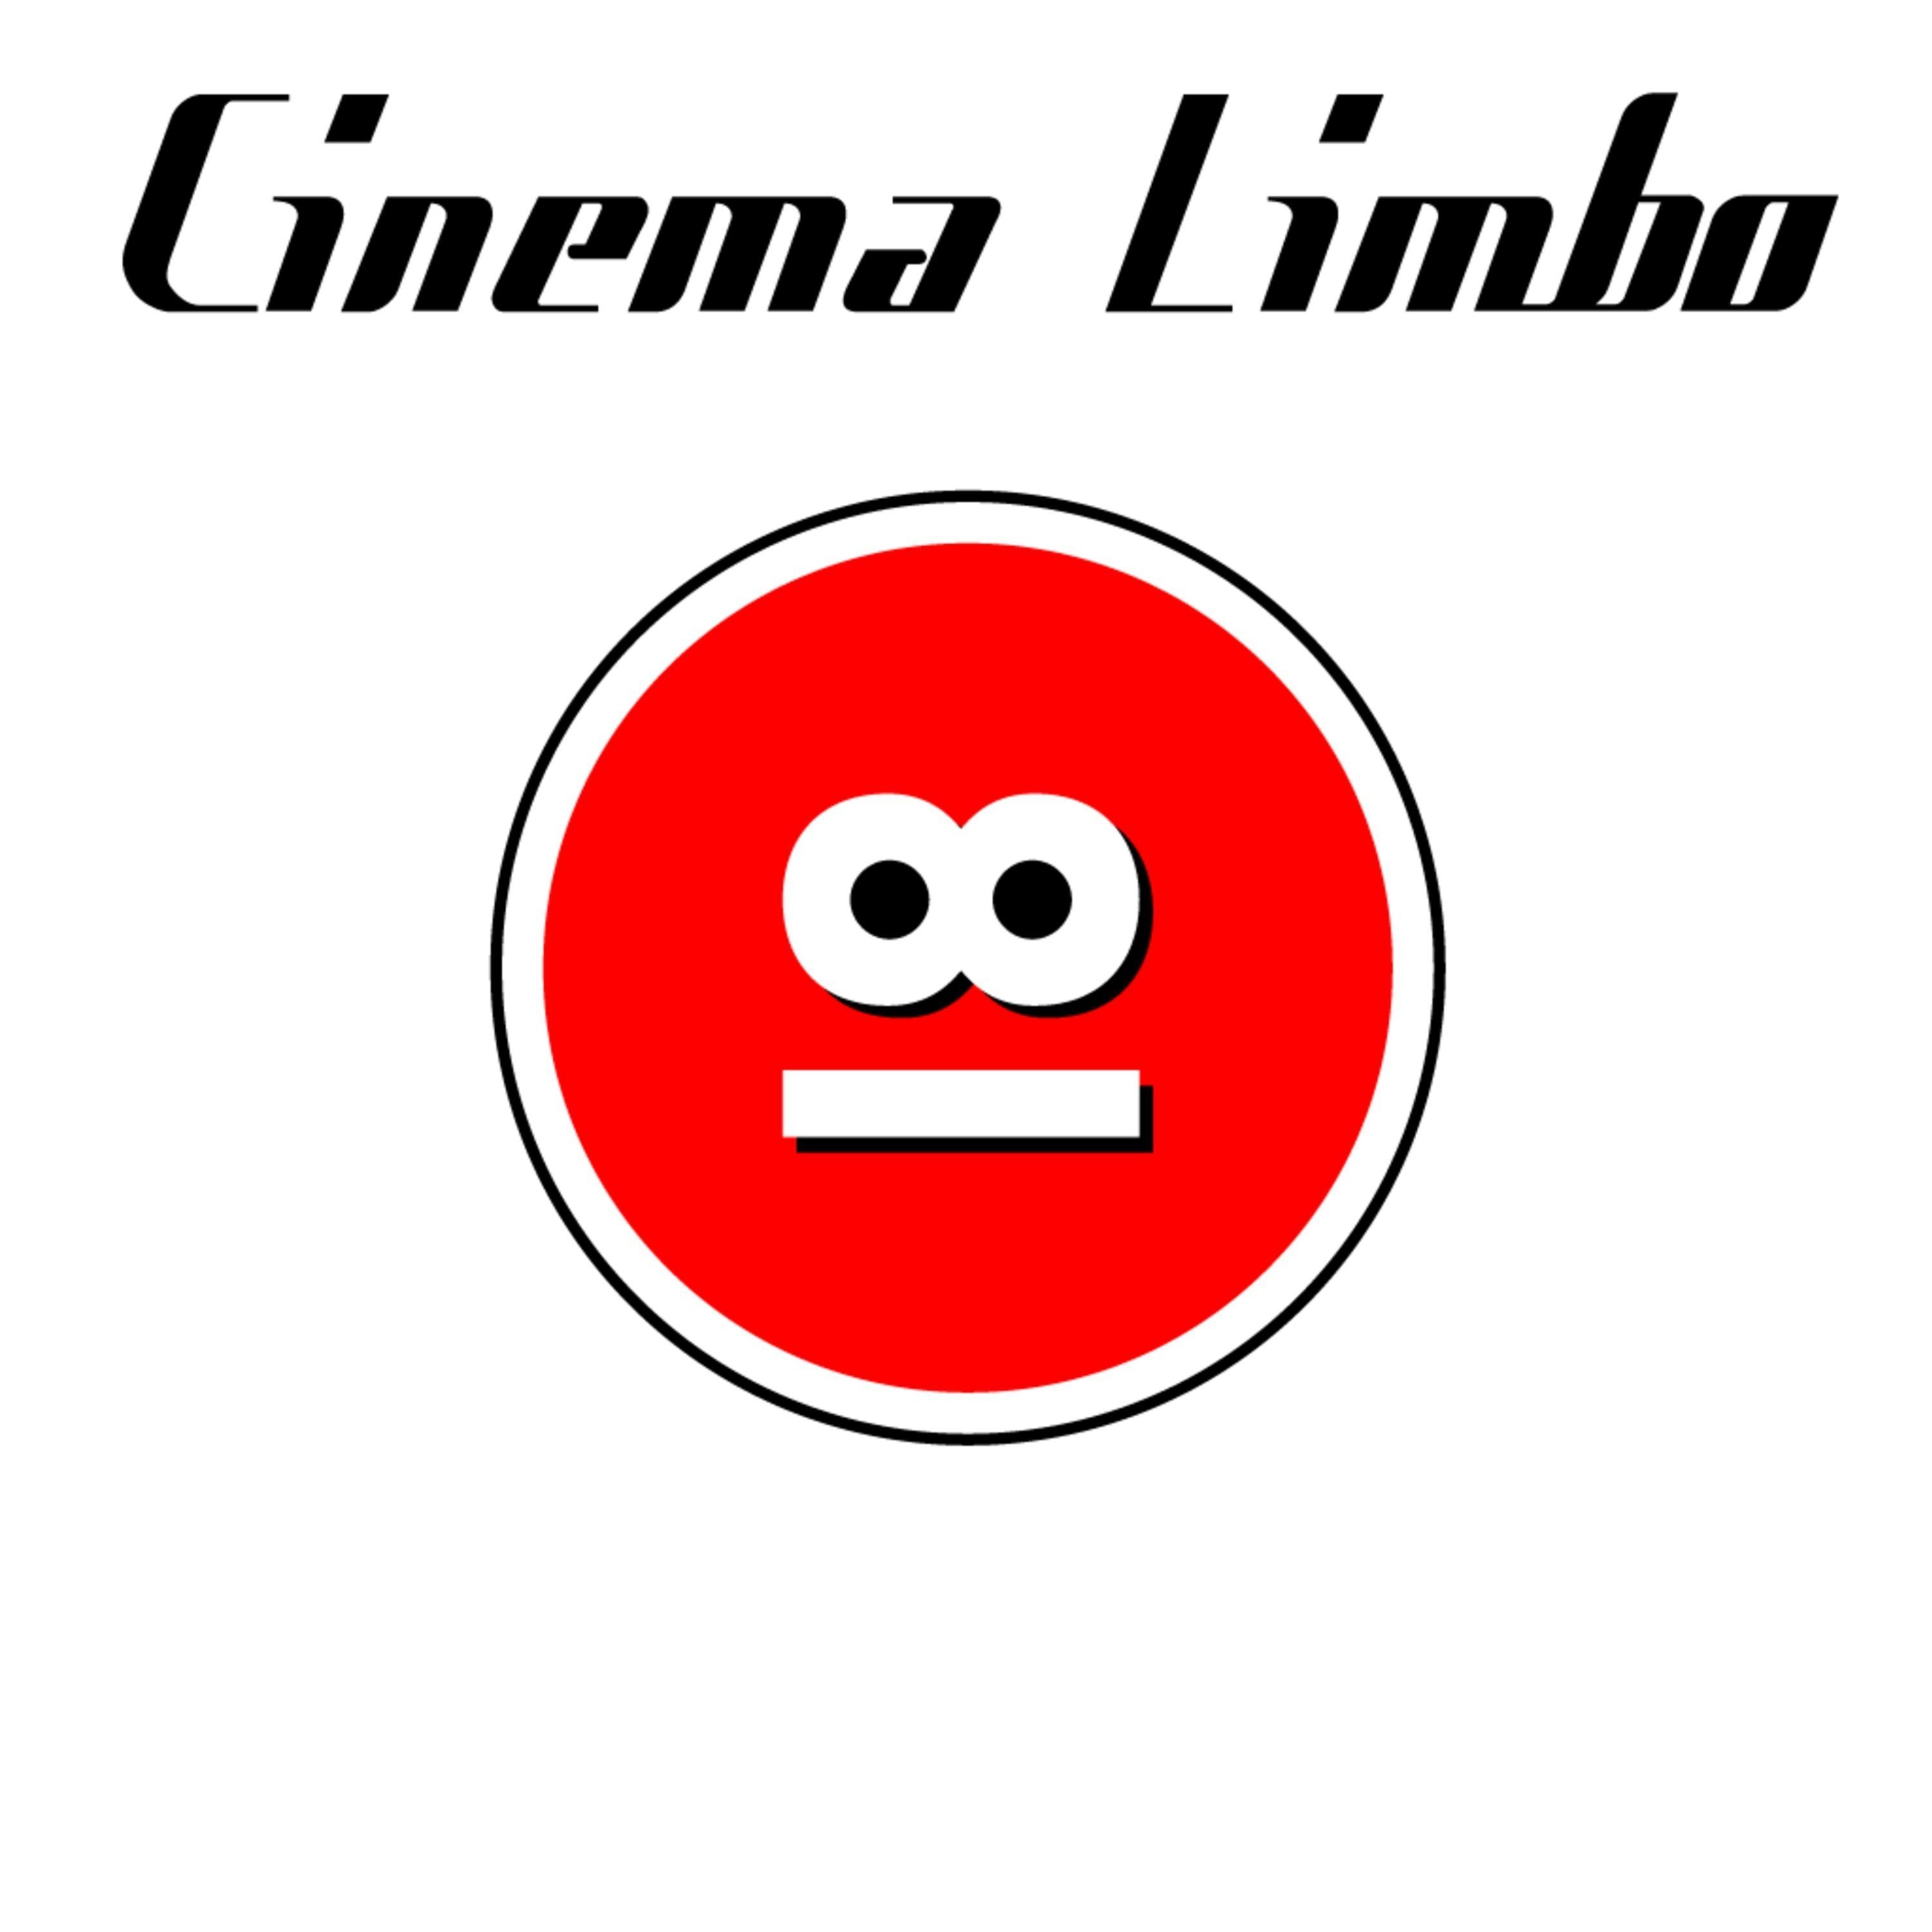 Cinema Limbo